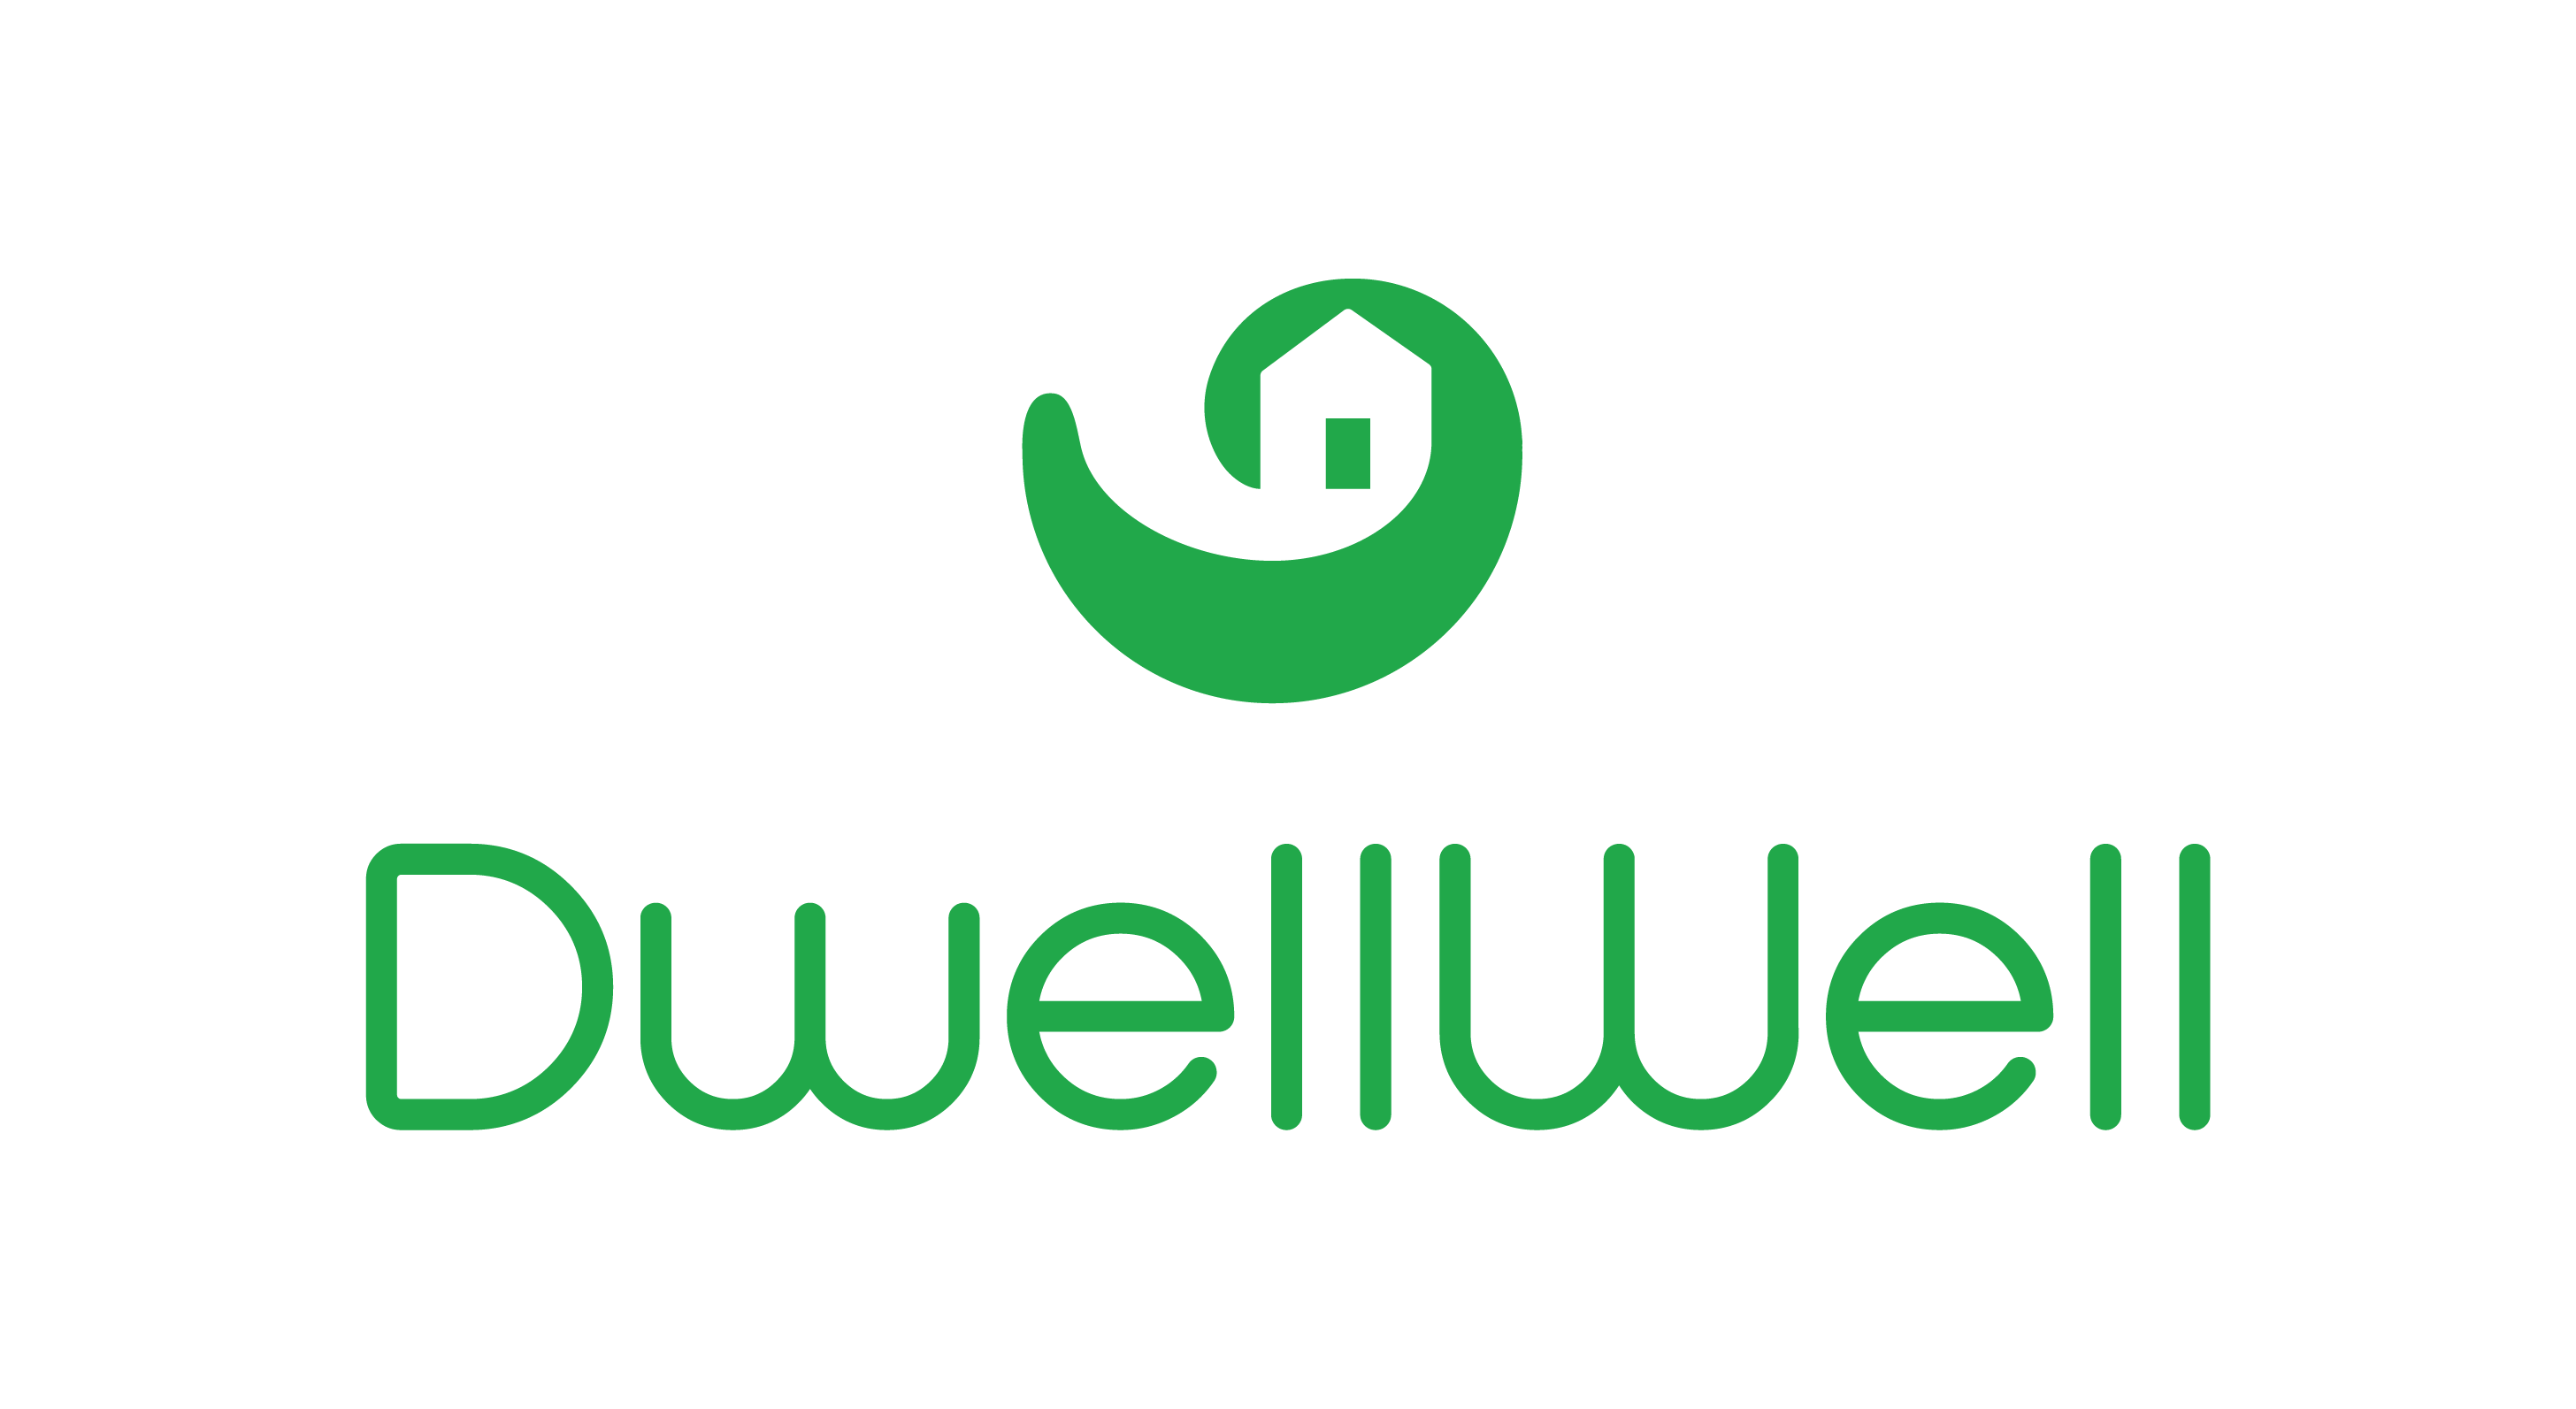 Dwellwell